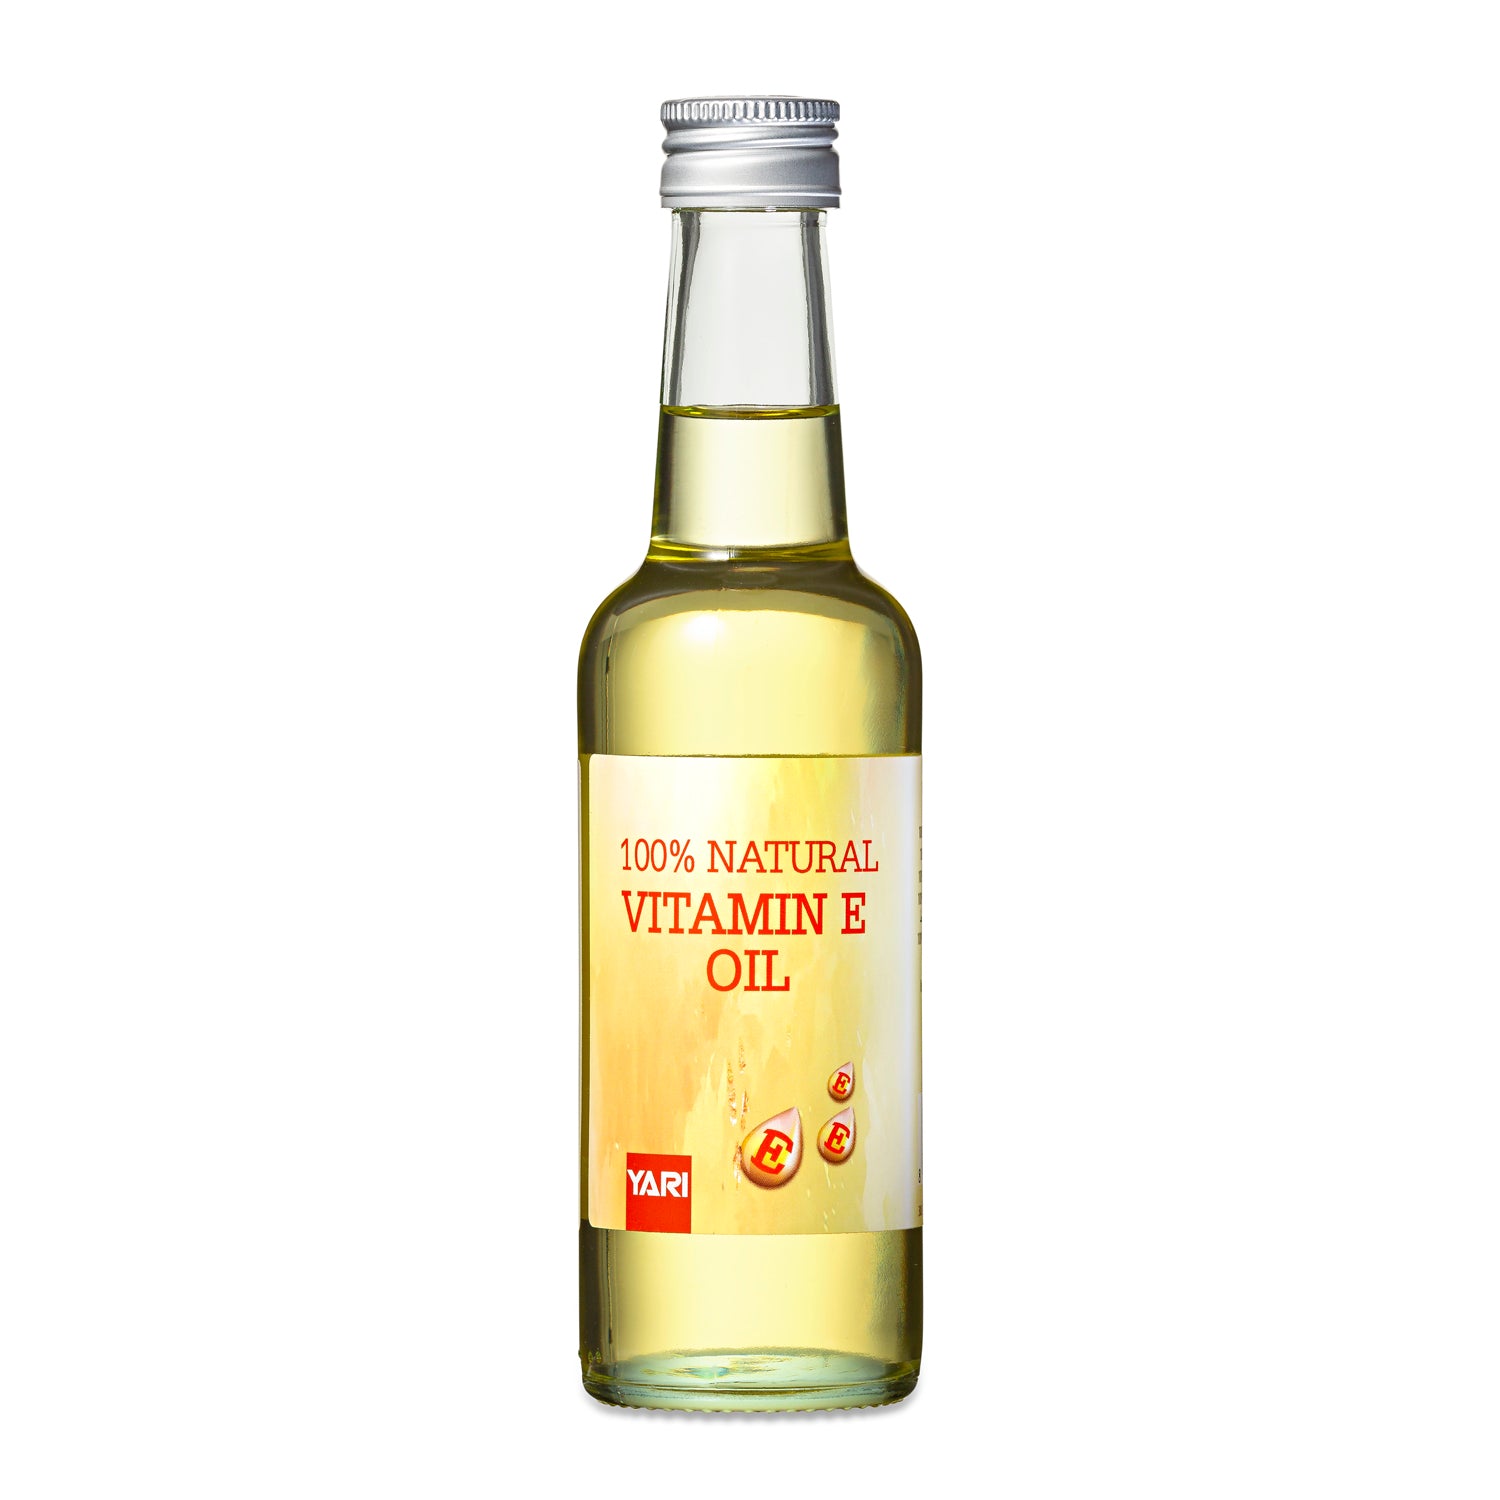 Yari - 100% Natural Vitamin E Oil 250ml